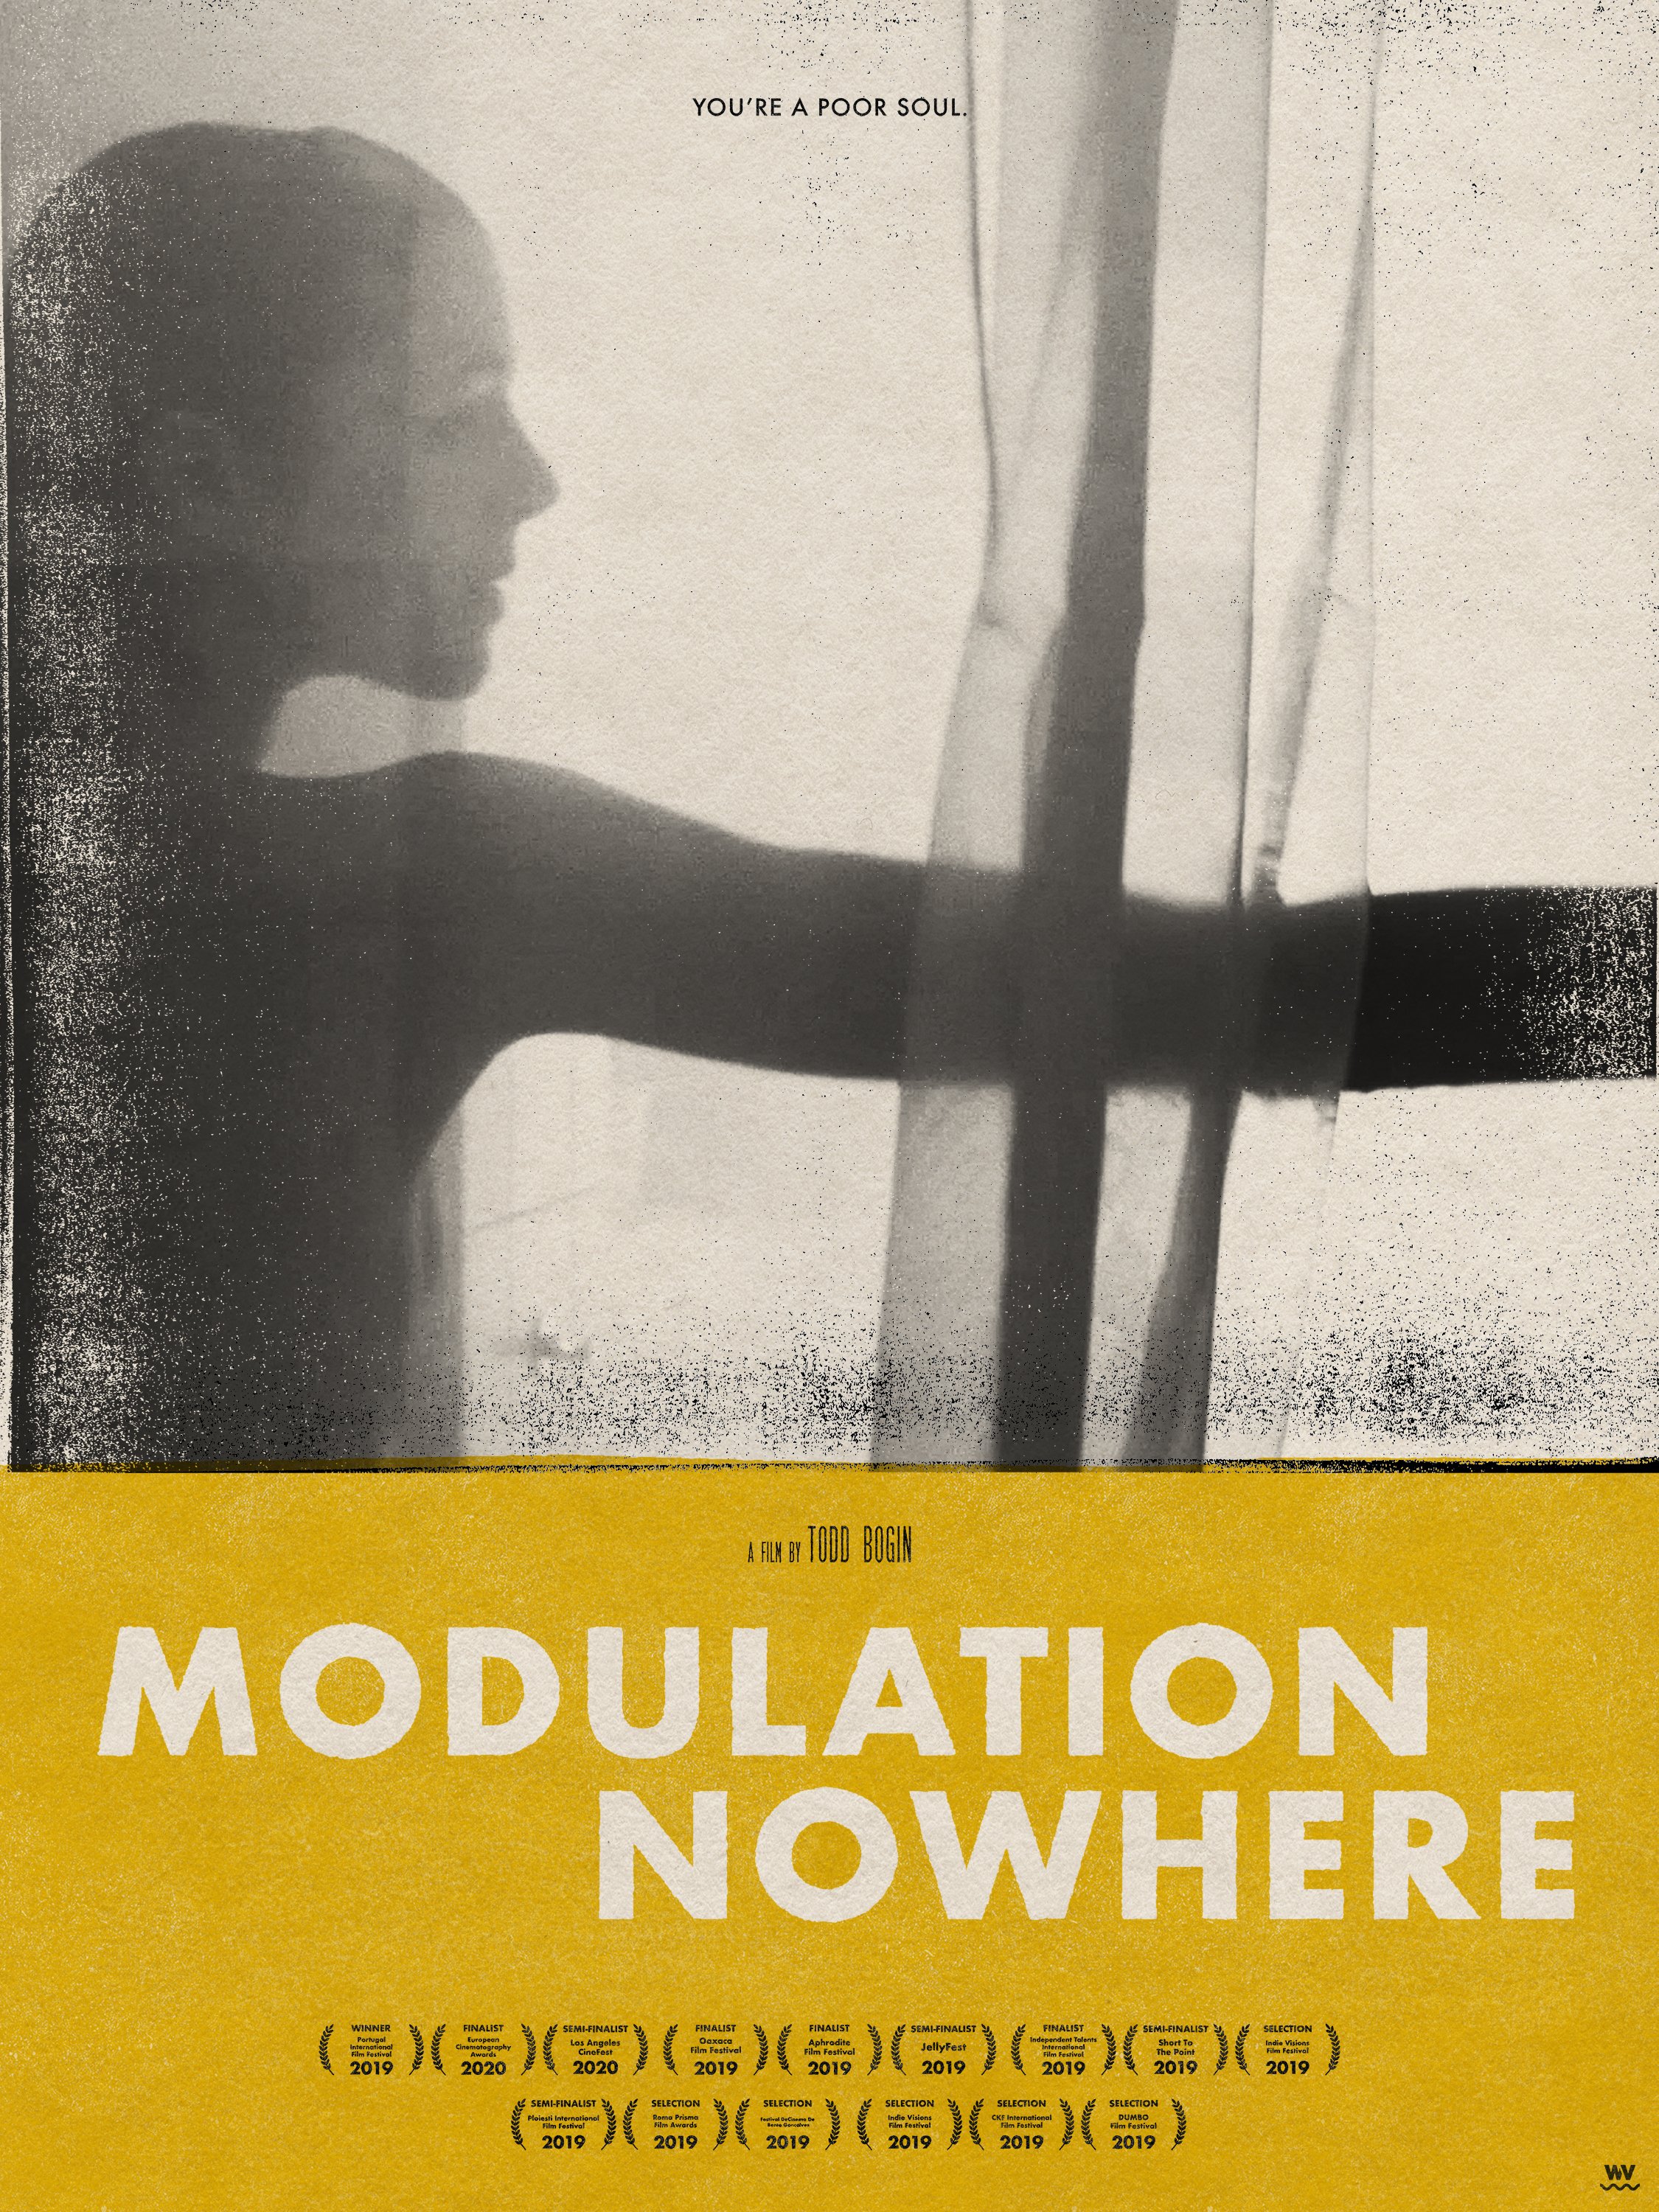 modulation nowhere_poster_yellow copy.jpg